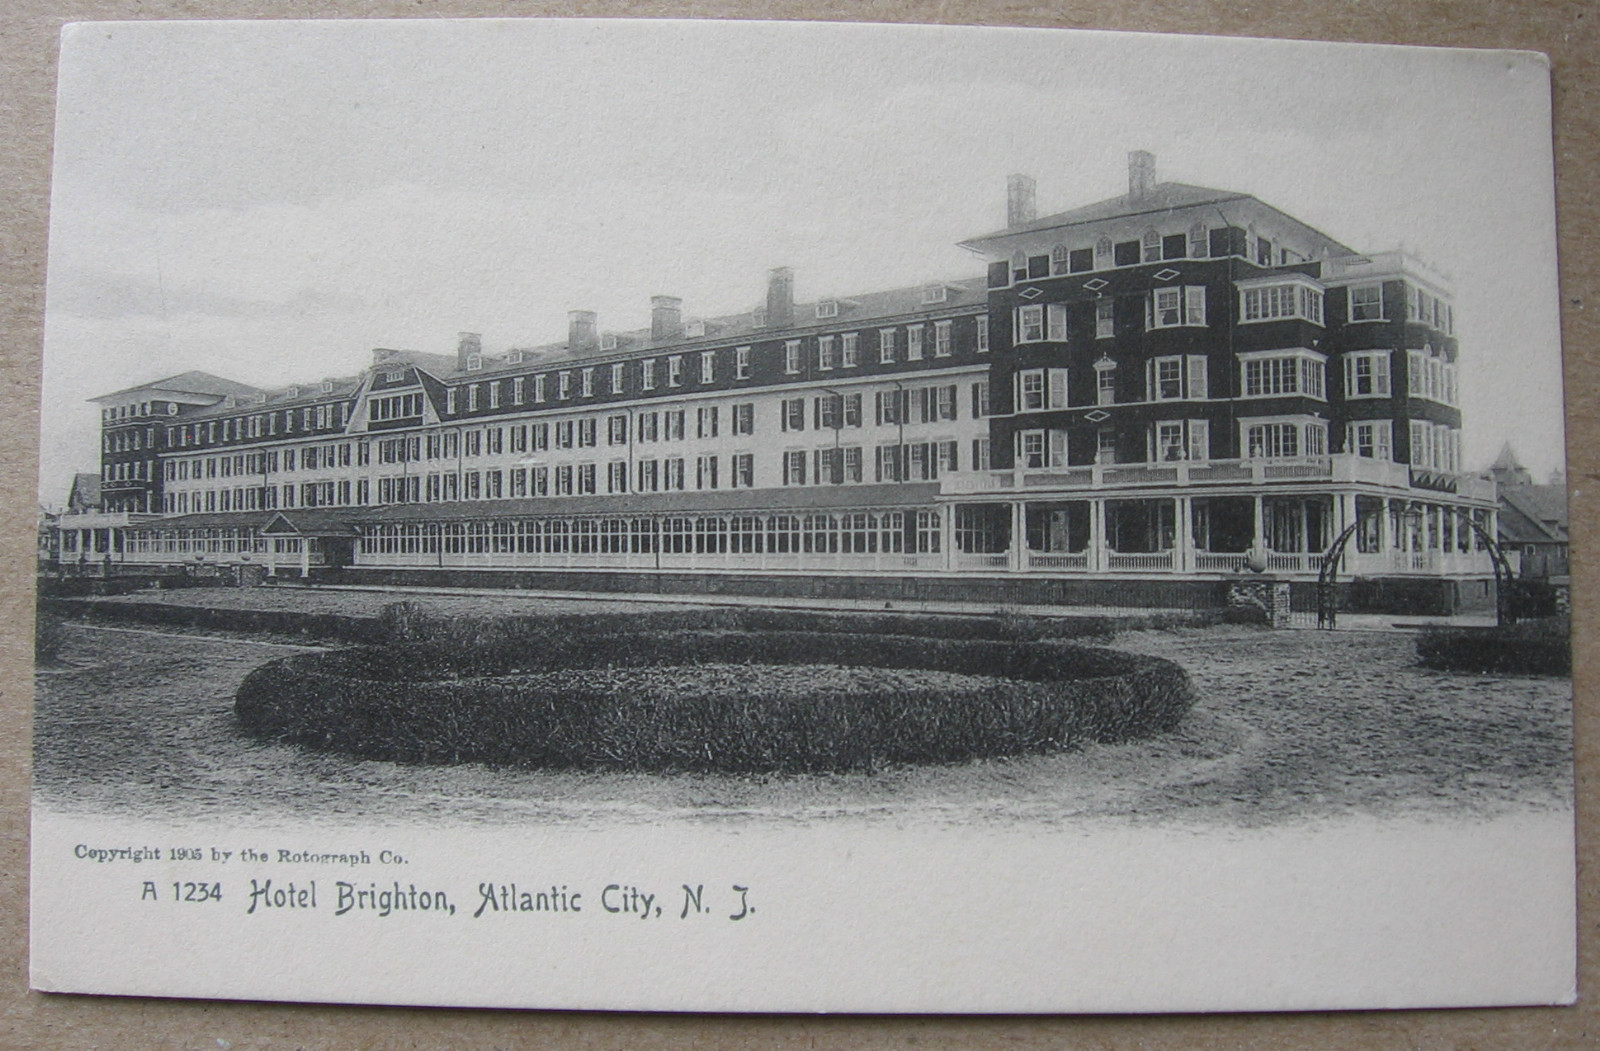 Atlantic City - The Hotel Brighton - 1905